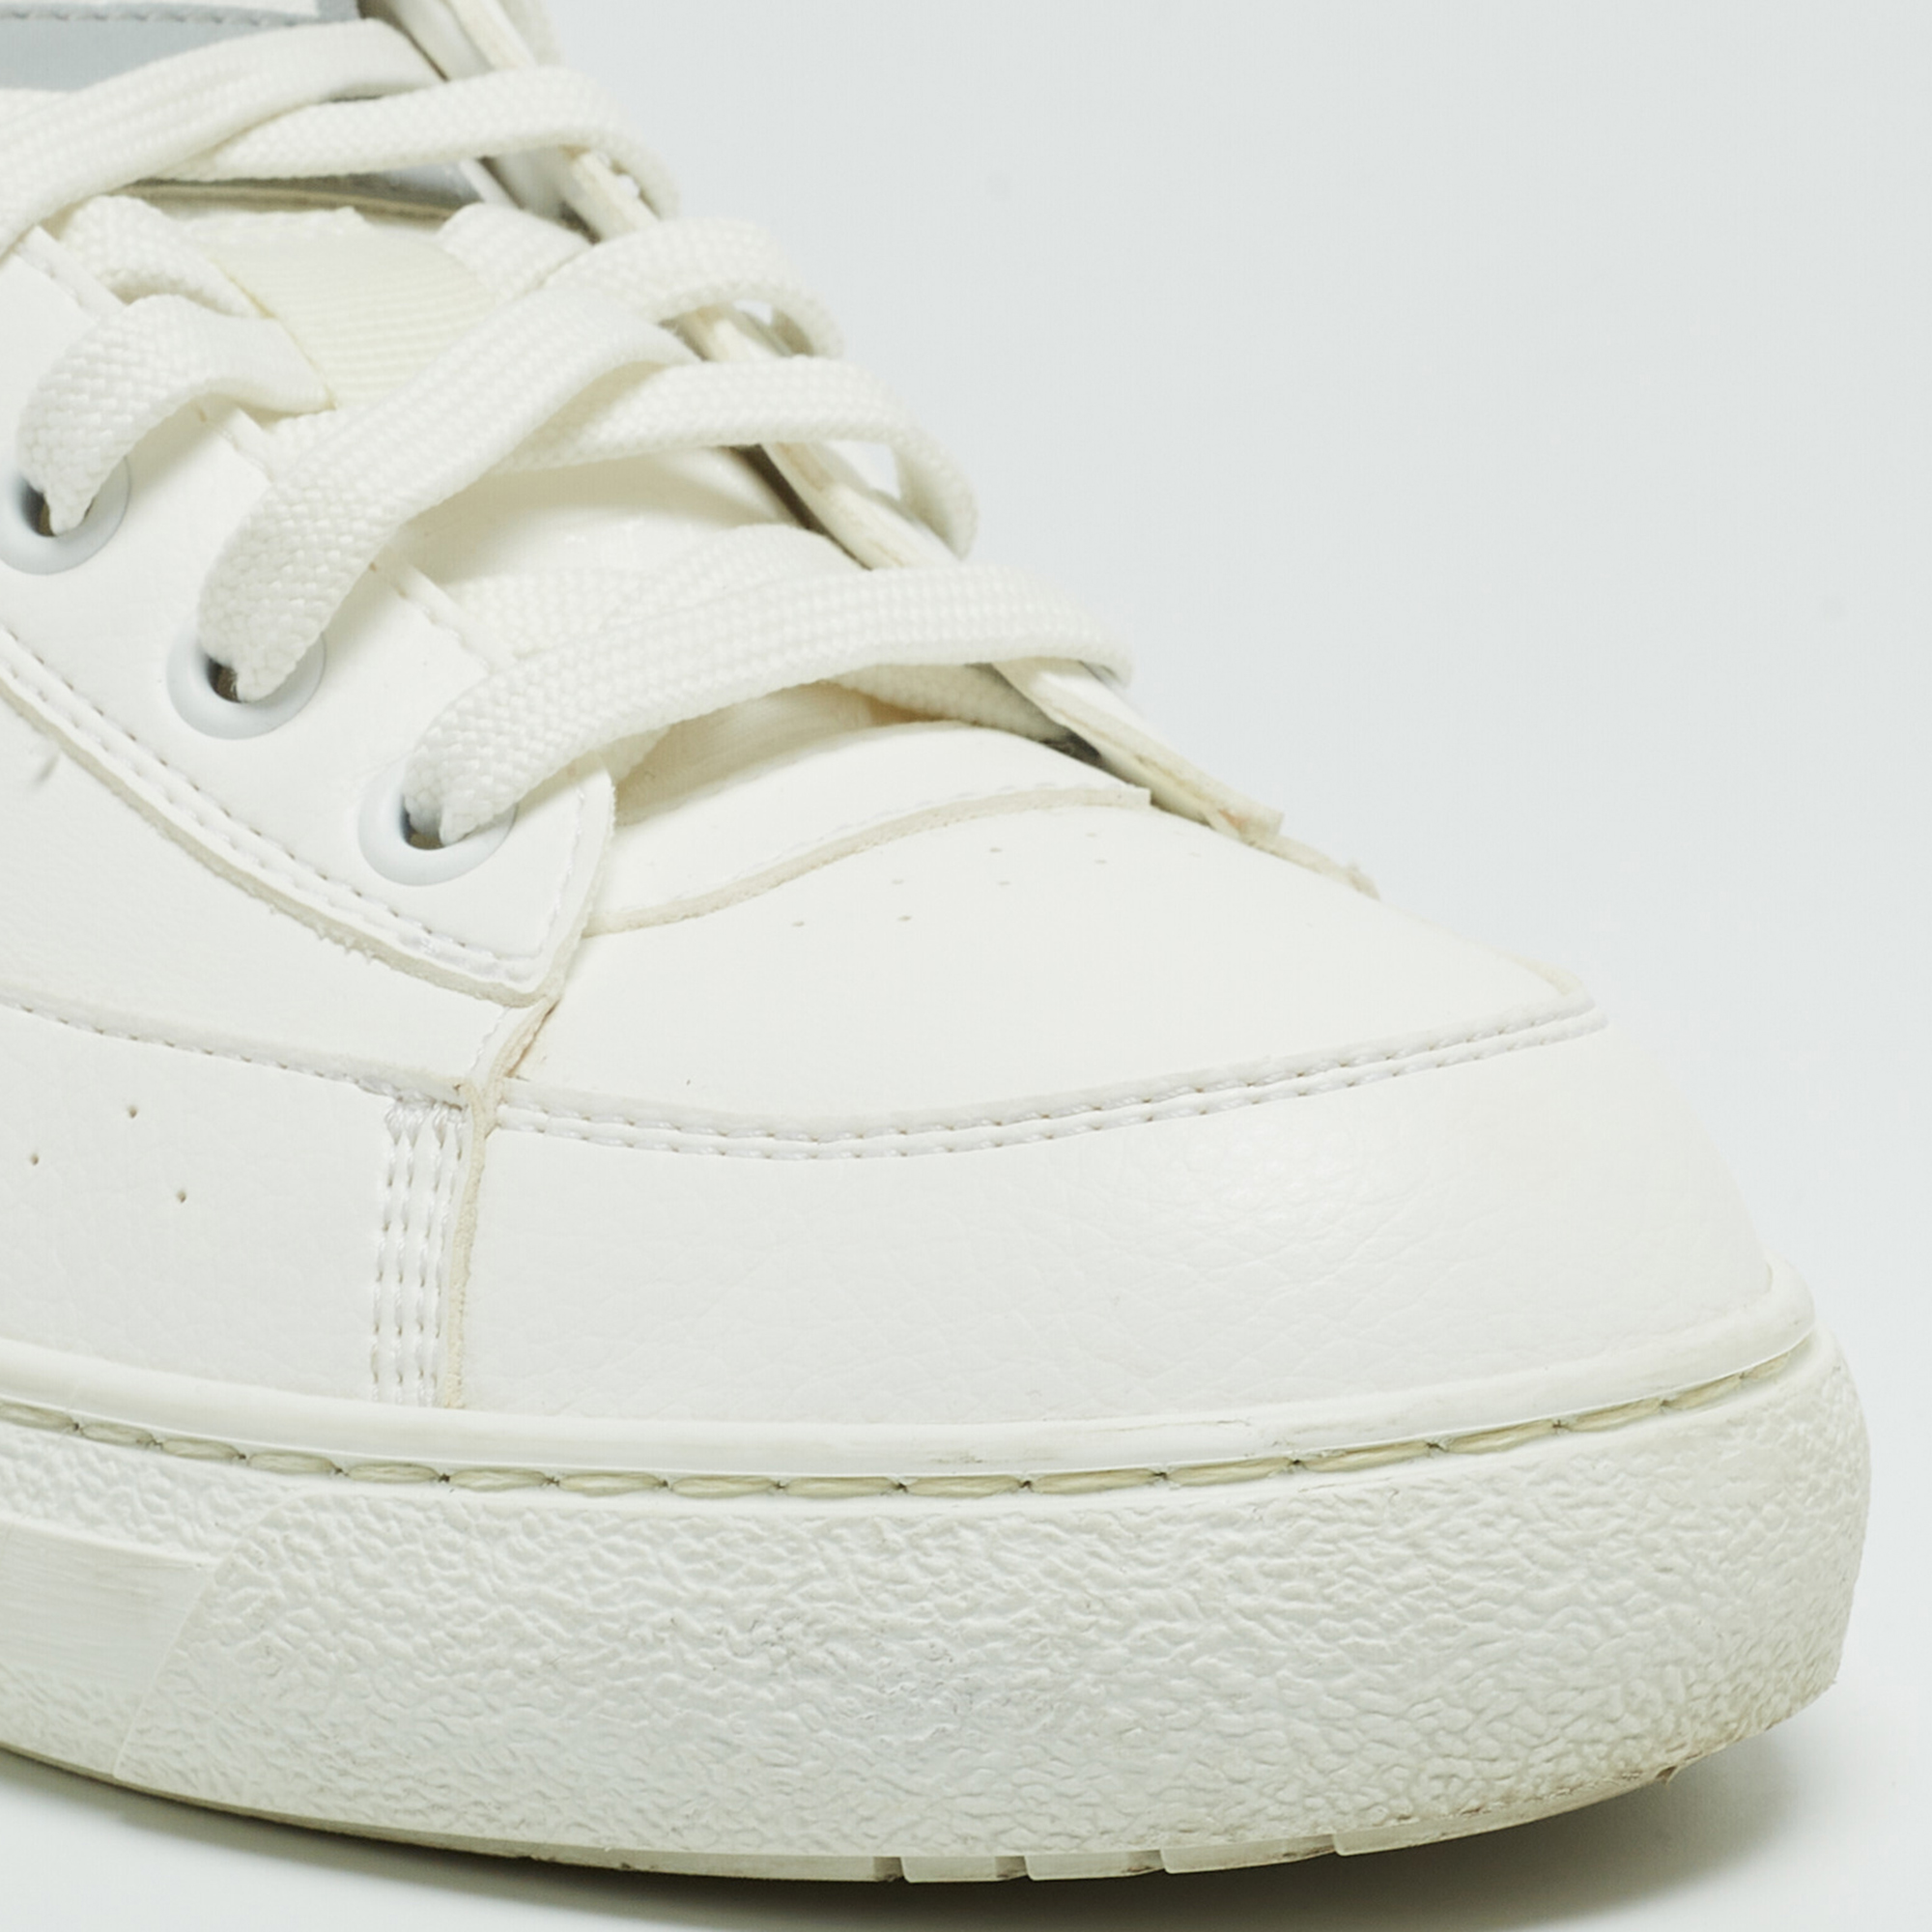 Louis Vuitton White Leather LV Logo Low Top Sneakers Size 38